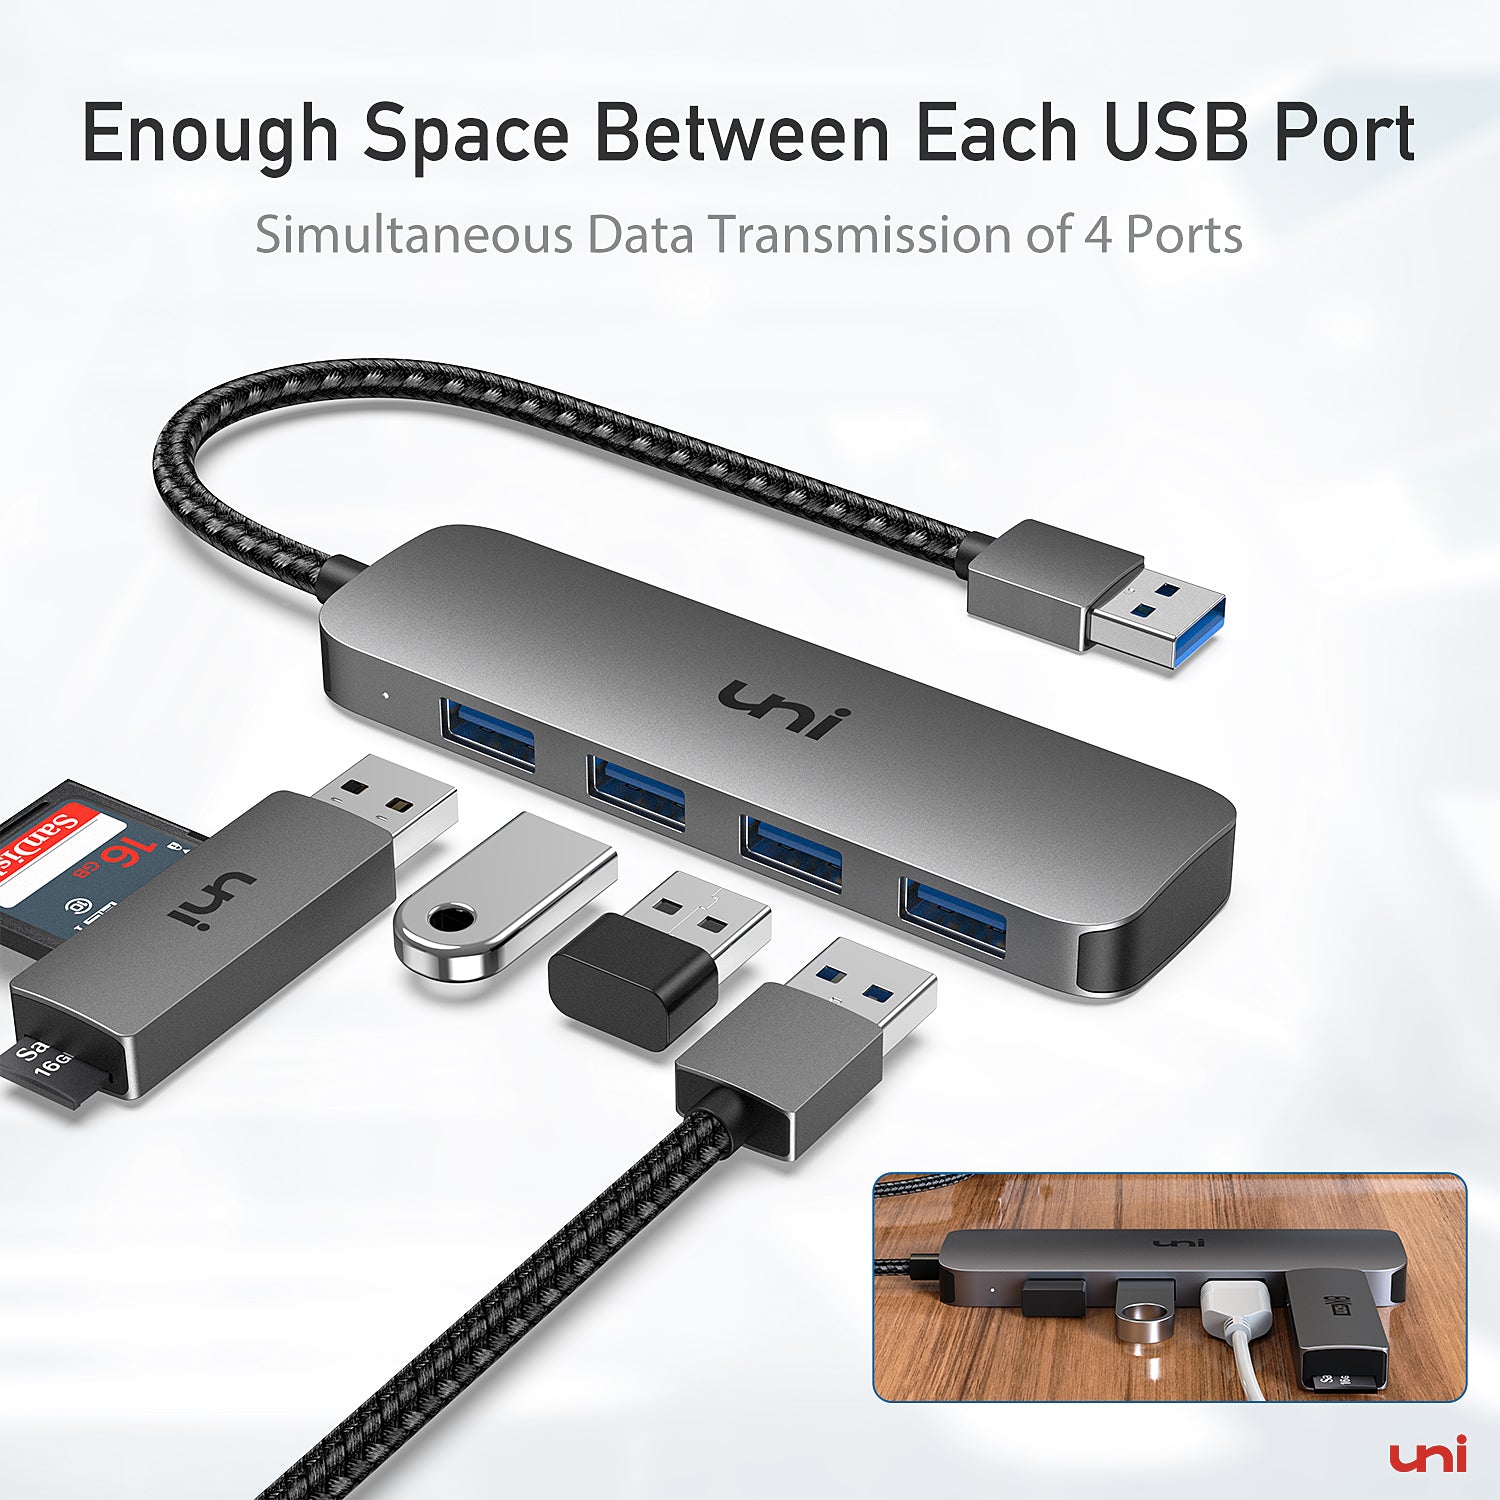  Hub USB 3.0. Concentrador de datos USB de 4 puertos